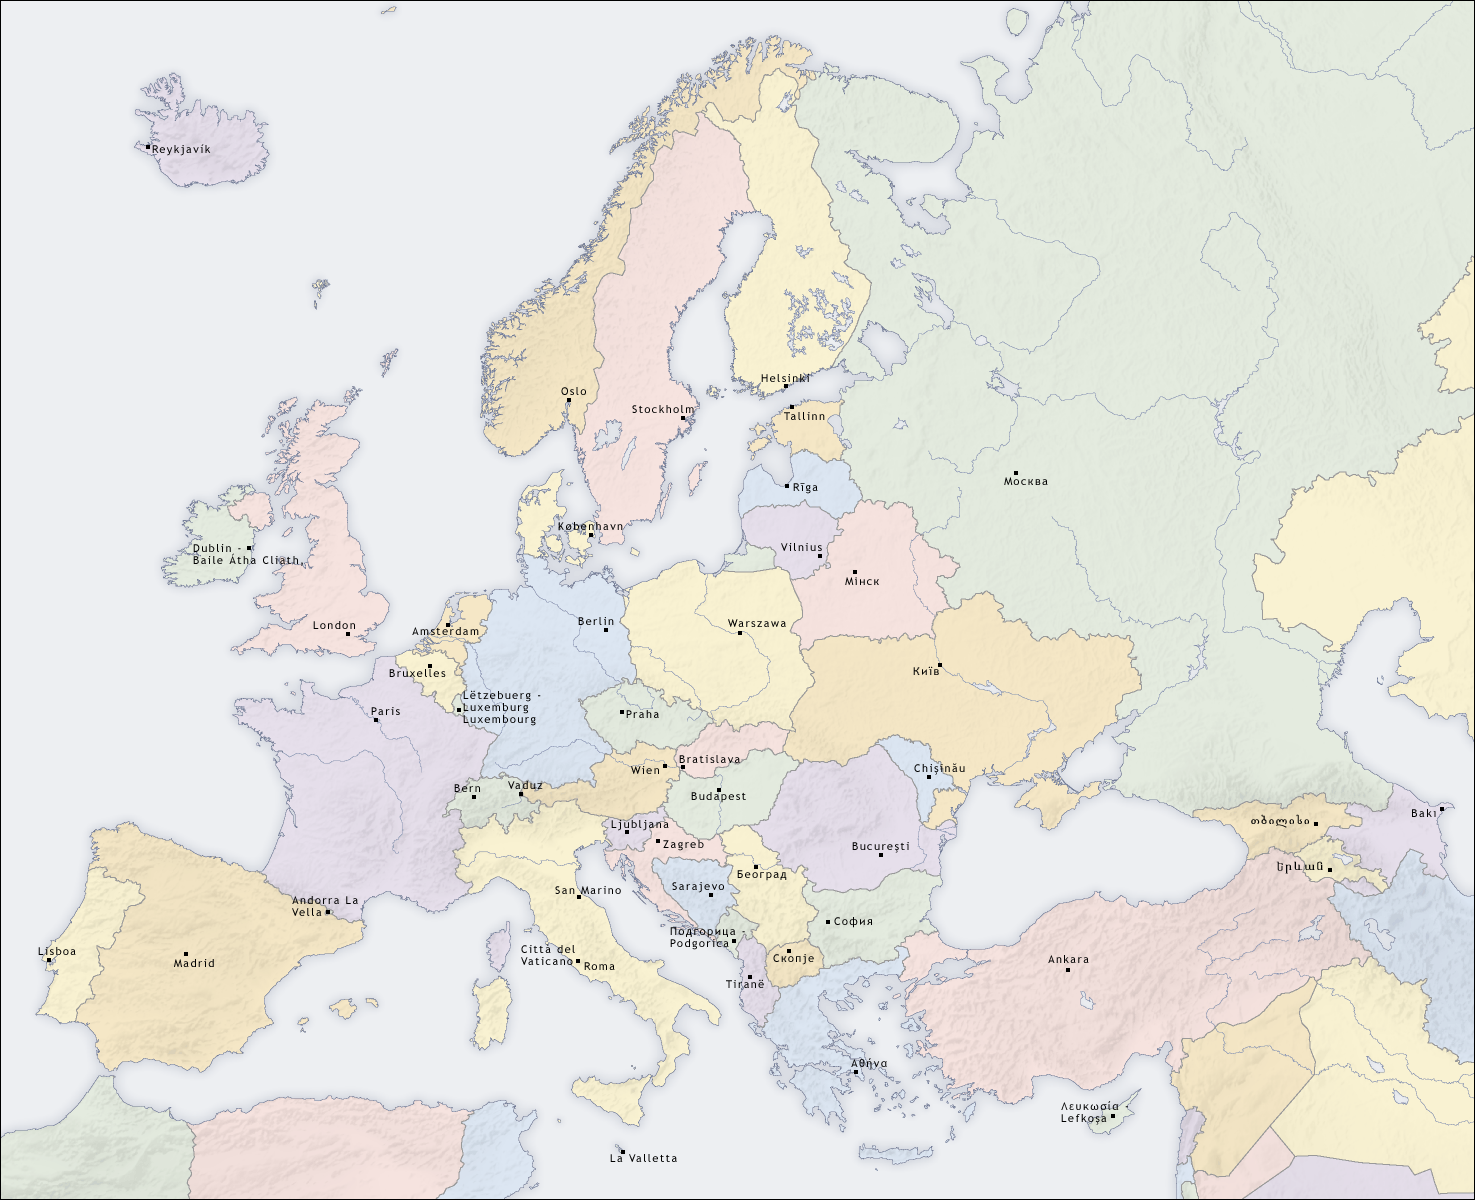 european cities map